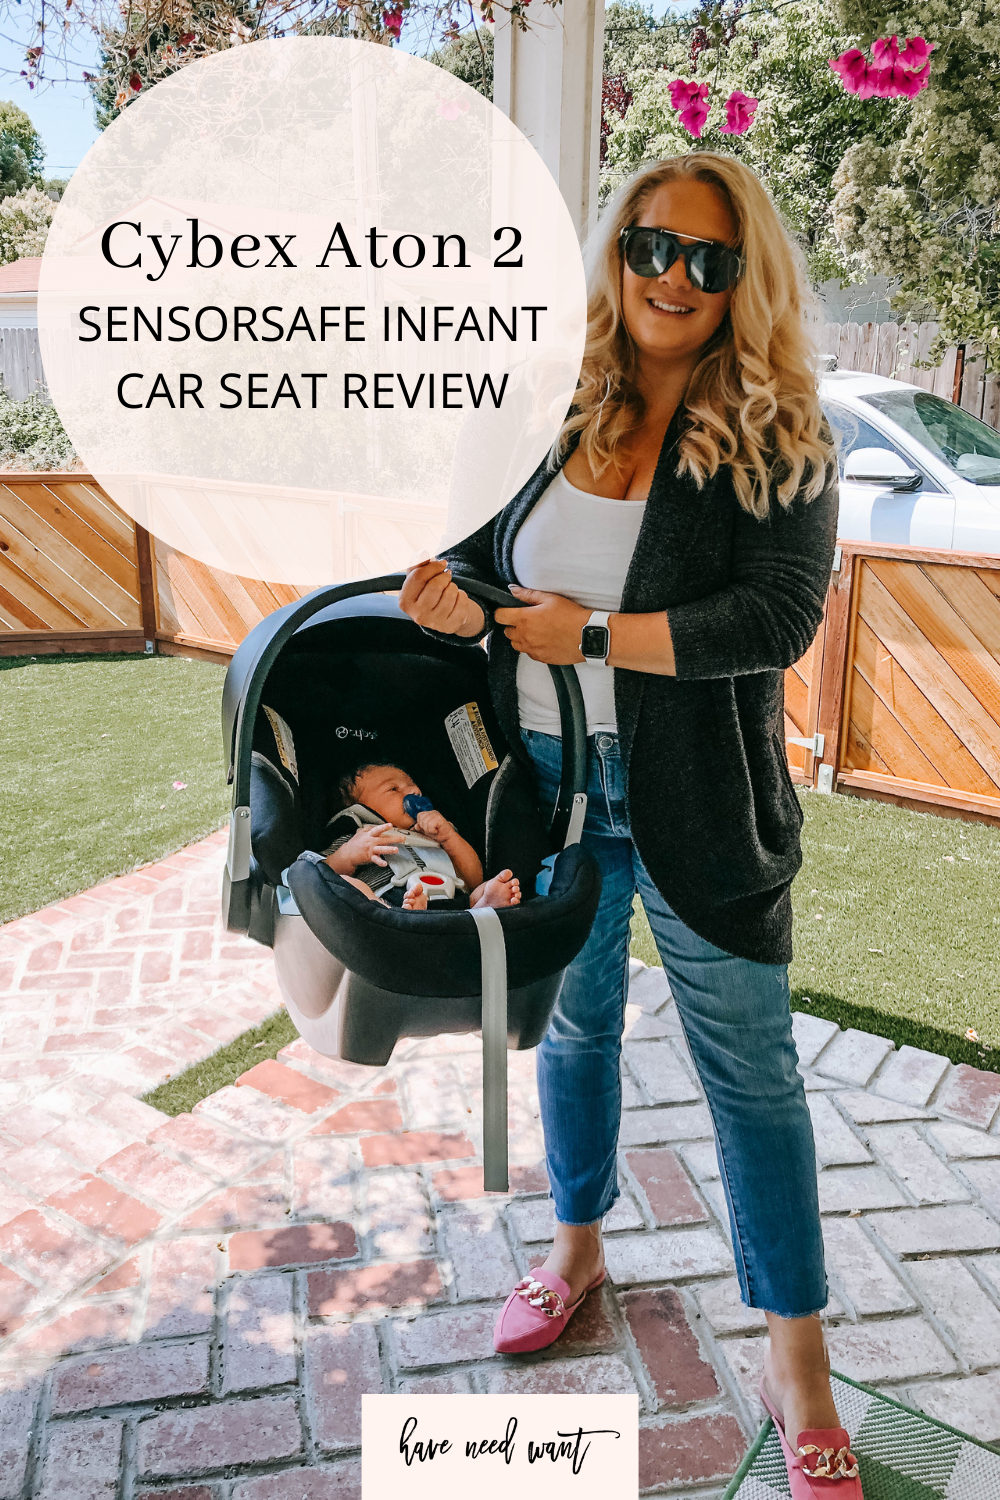 Cybex Aton 2 SensorSafe infant car seat review.